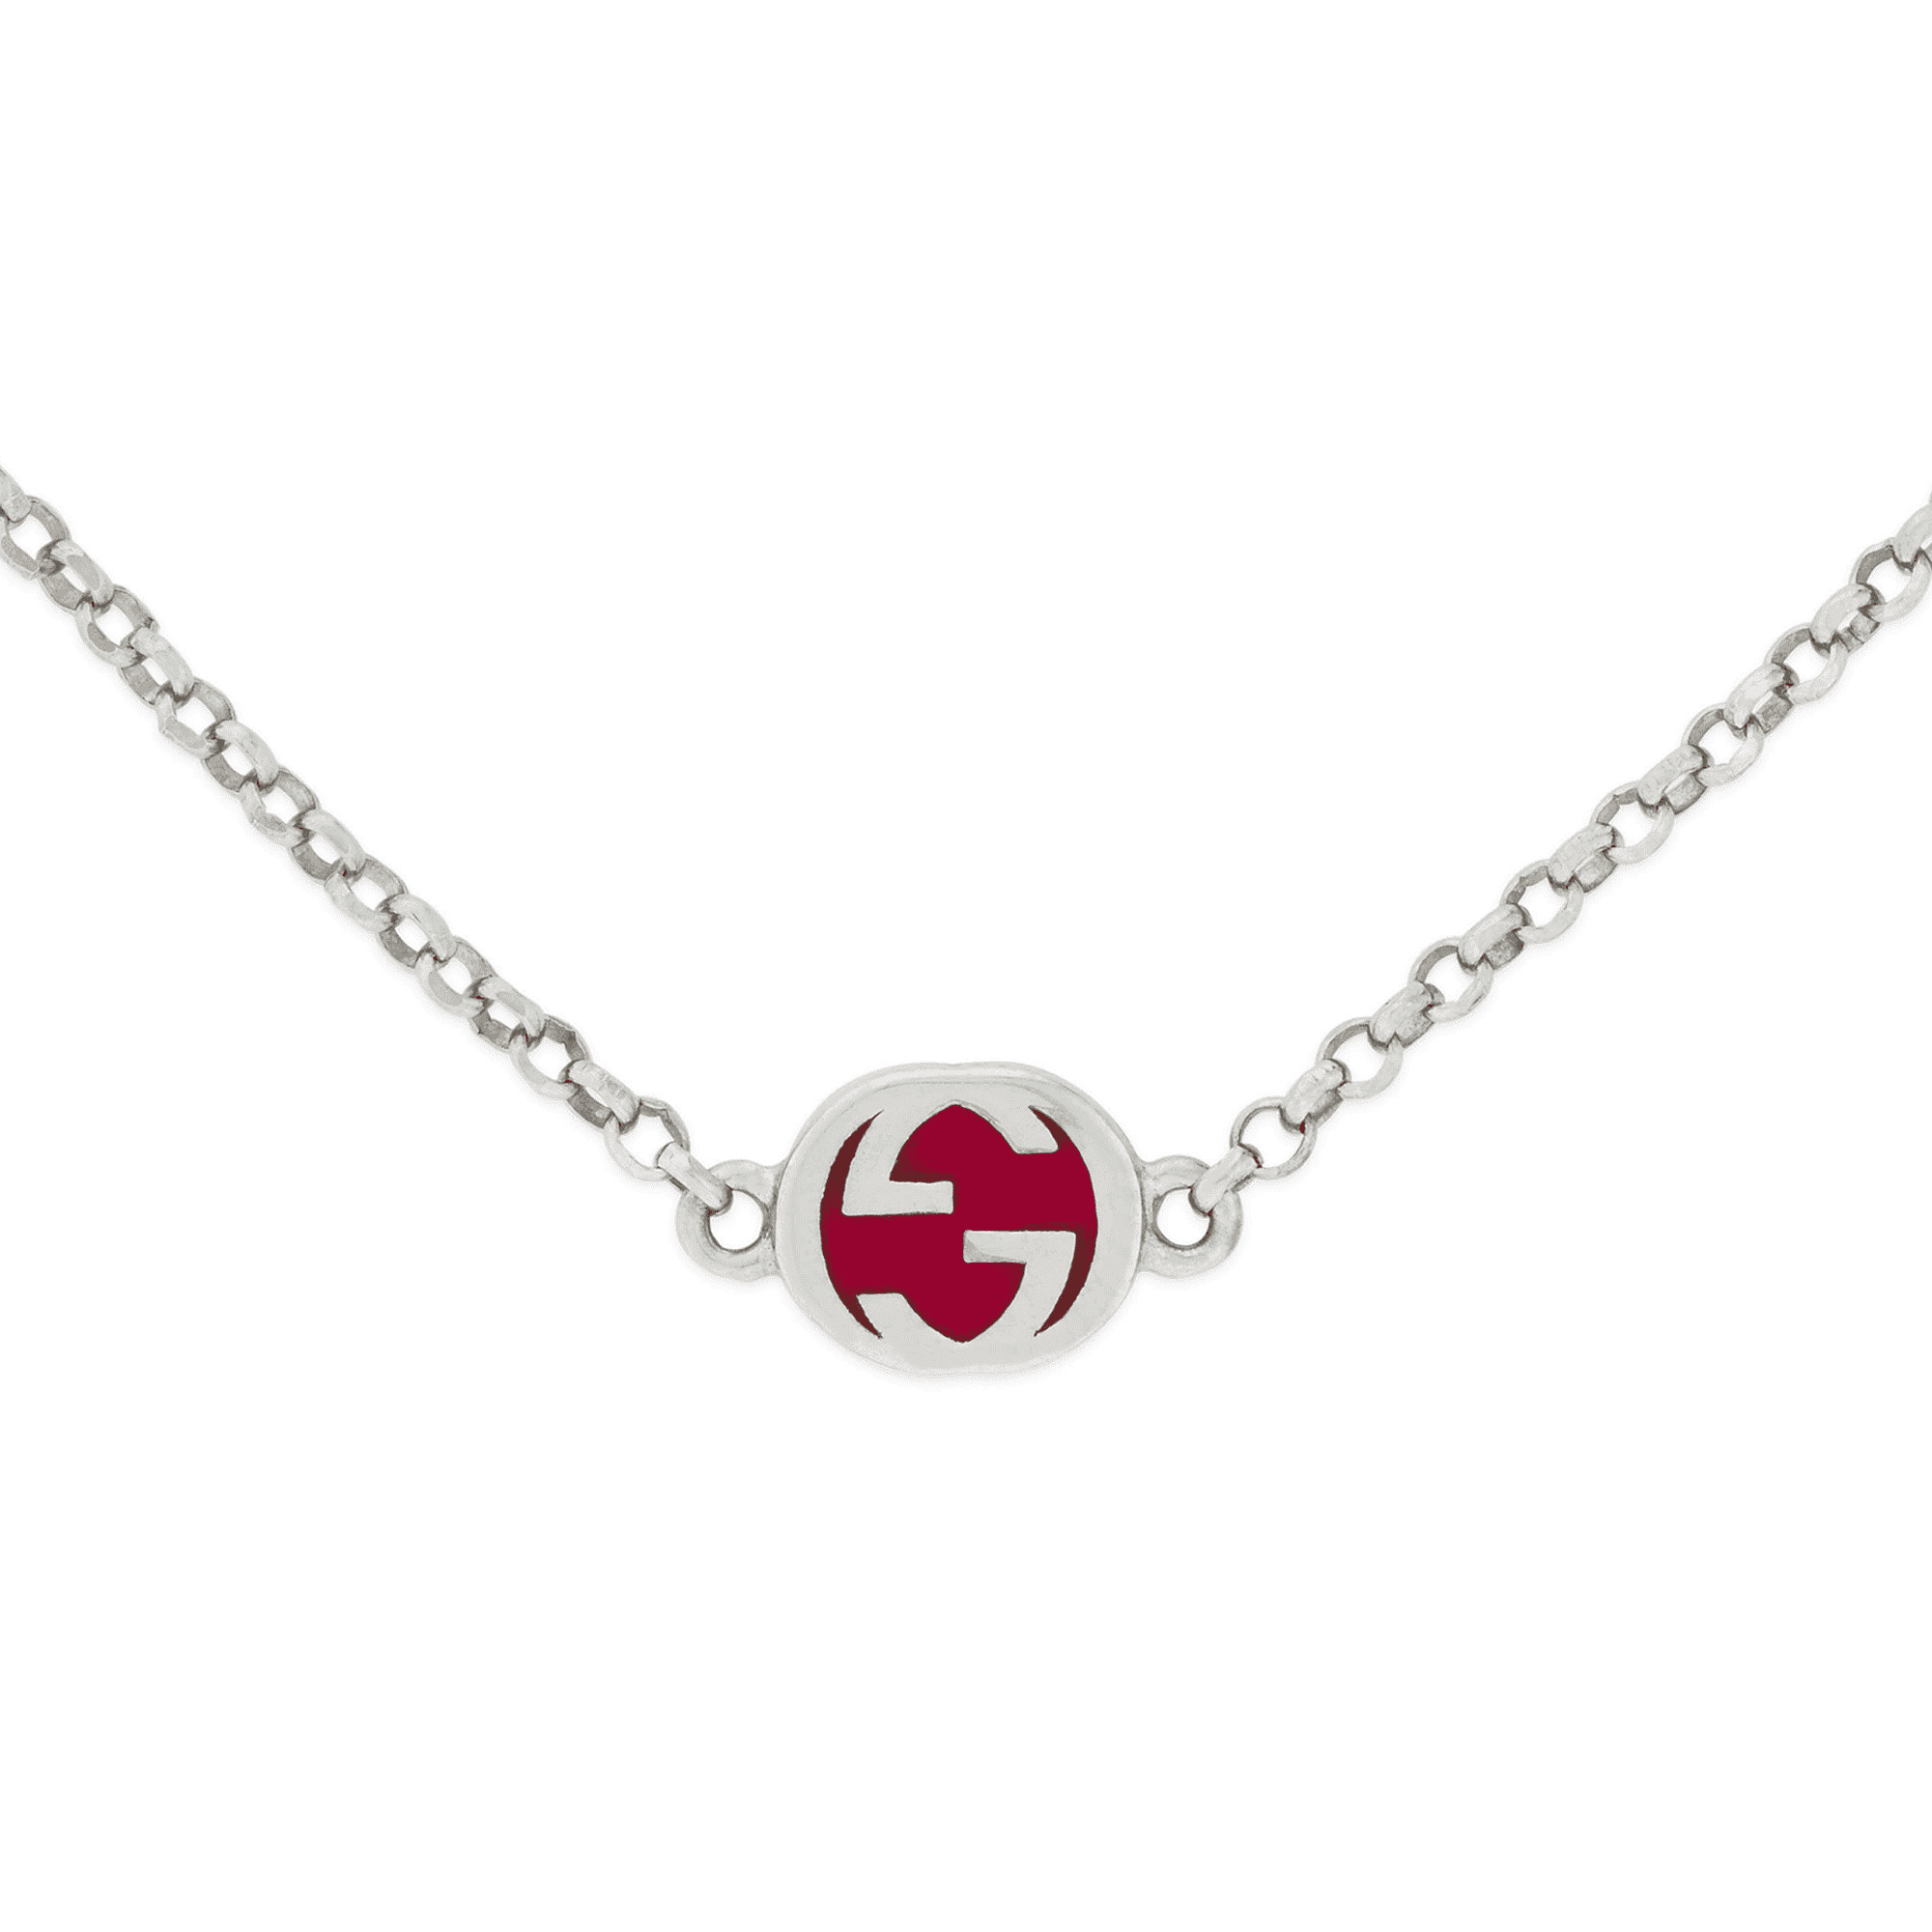 Interlocking Sterling Silver Coloured Enamel Design Necklace